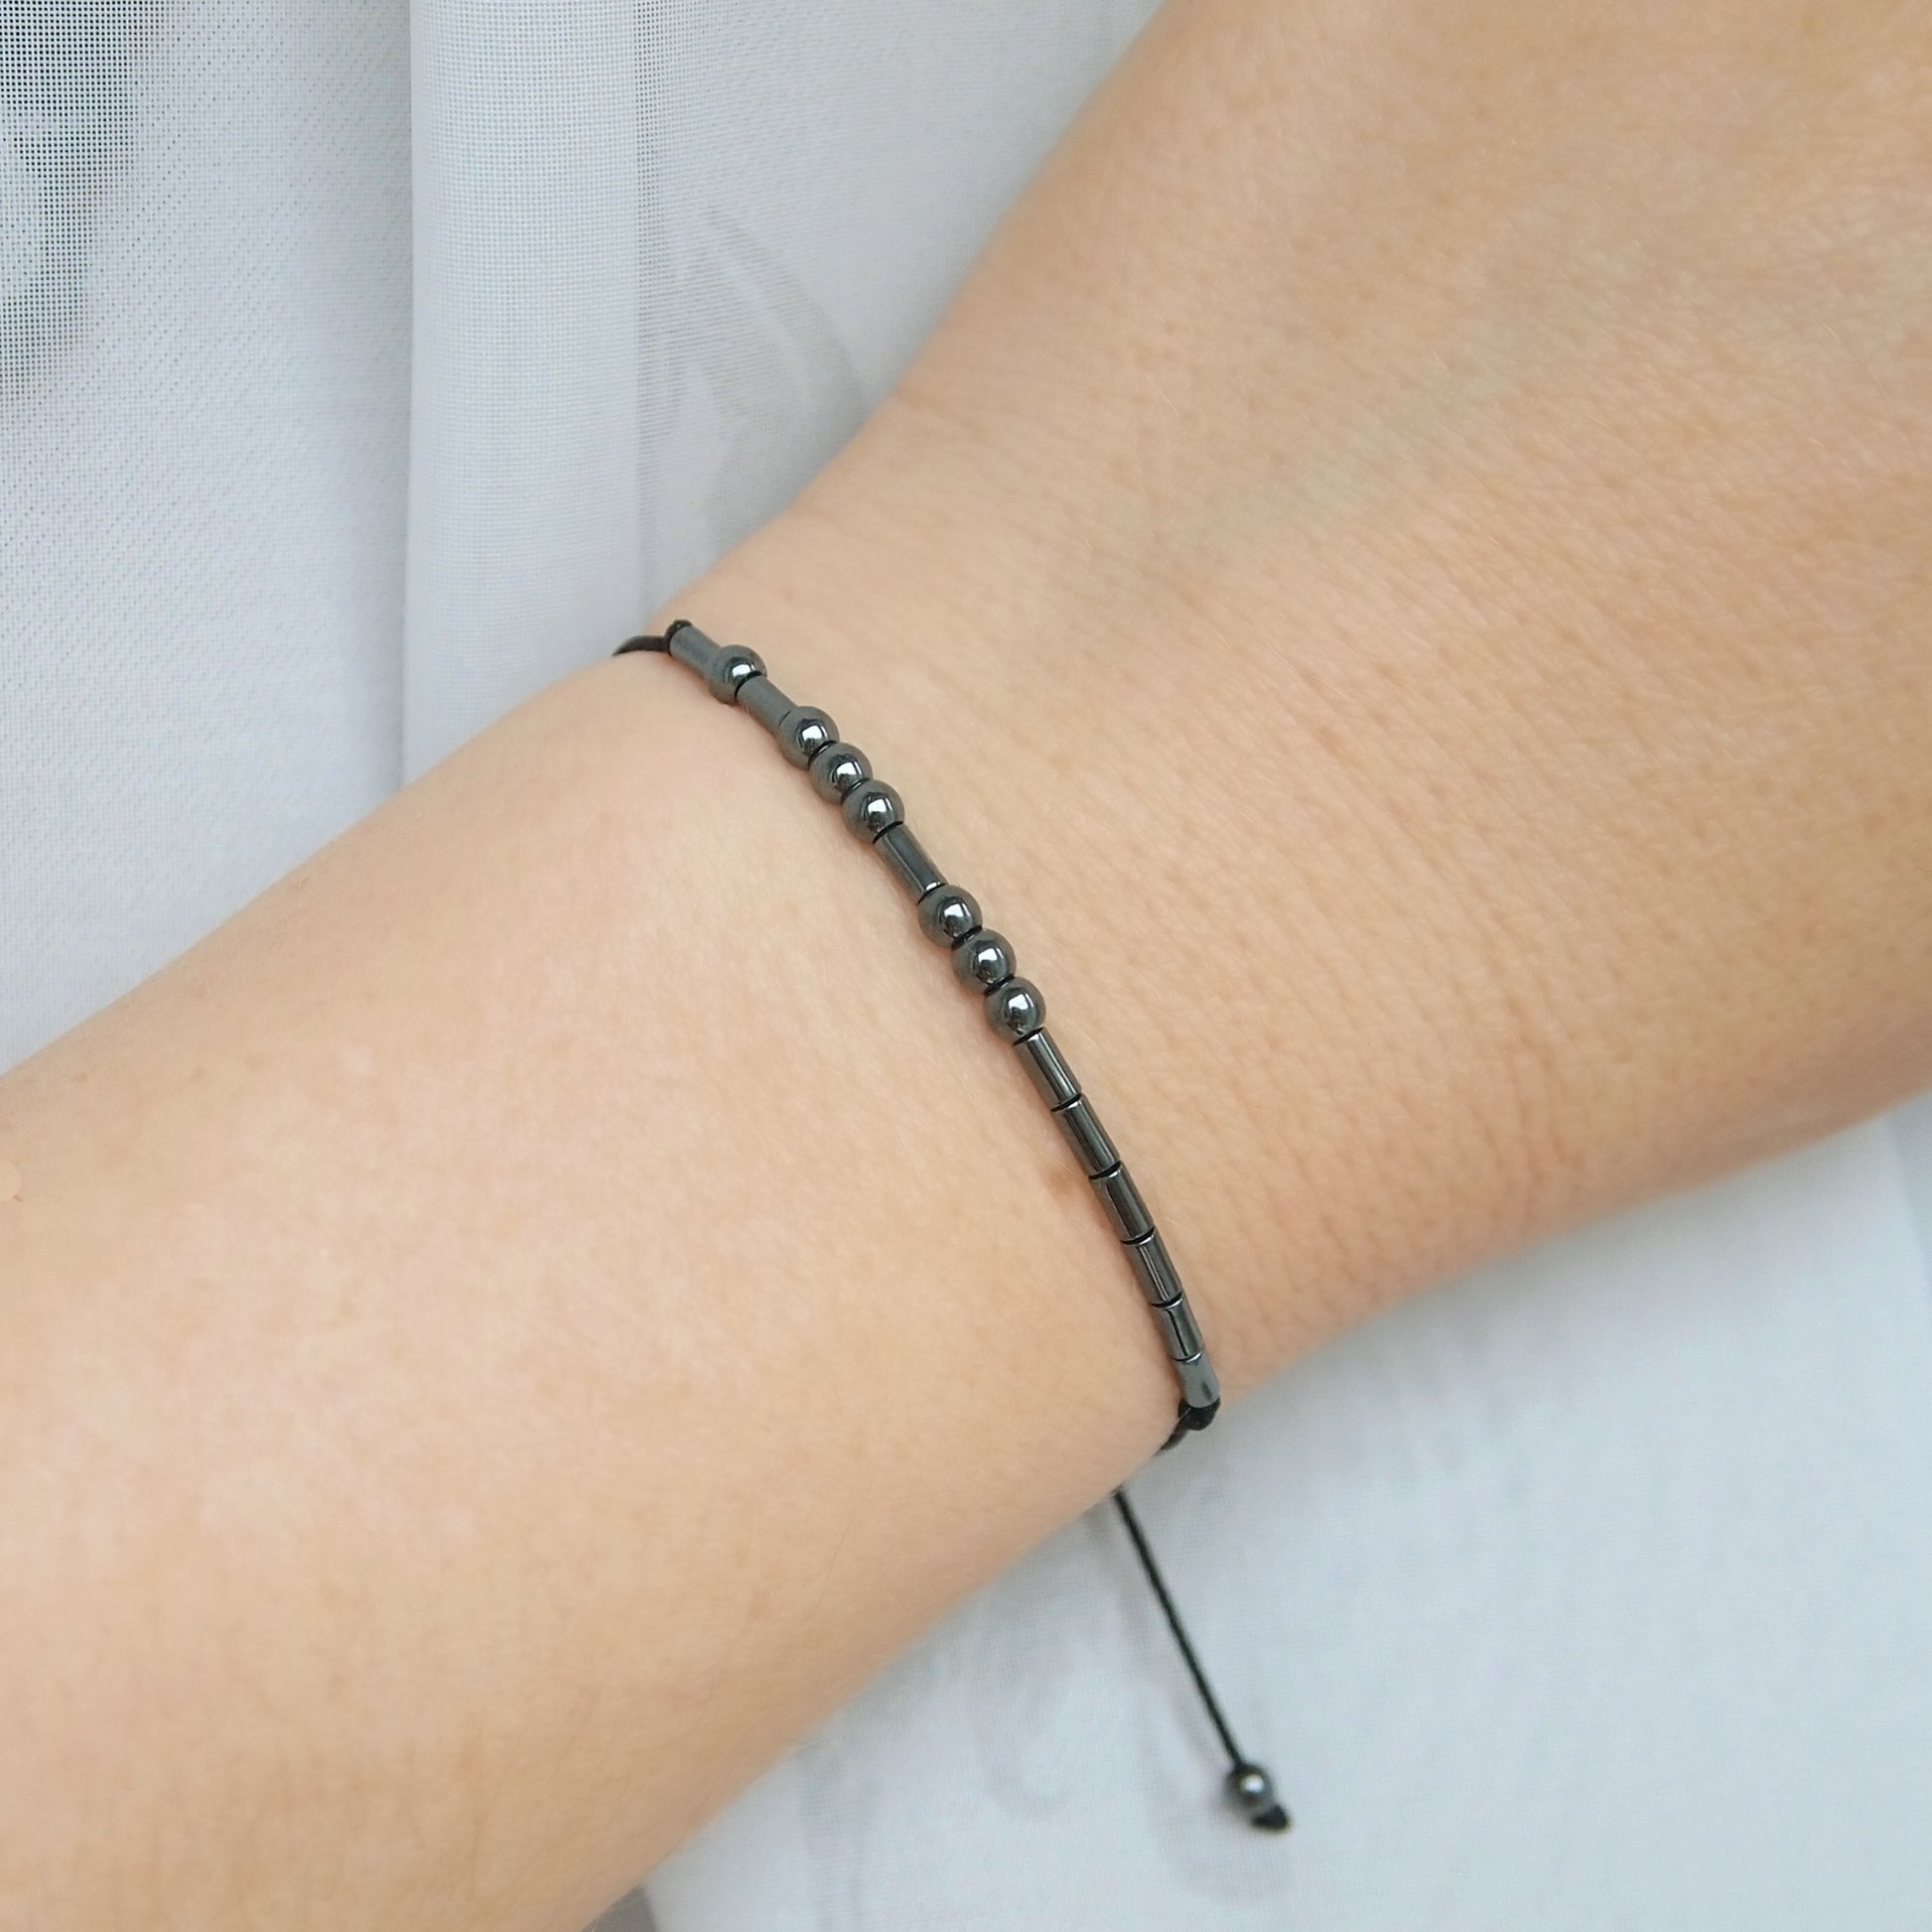 personalized sectet message bracelet, custom jewelry